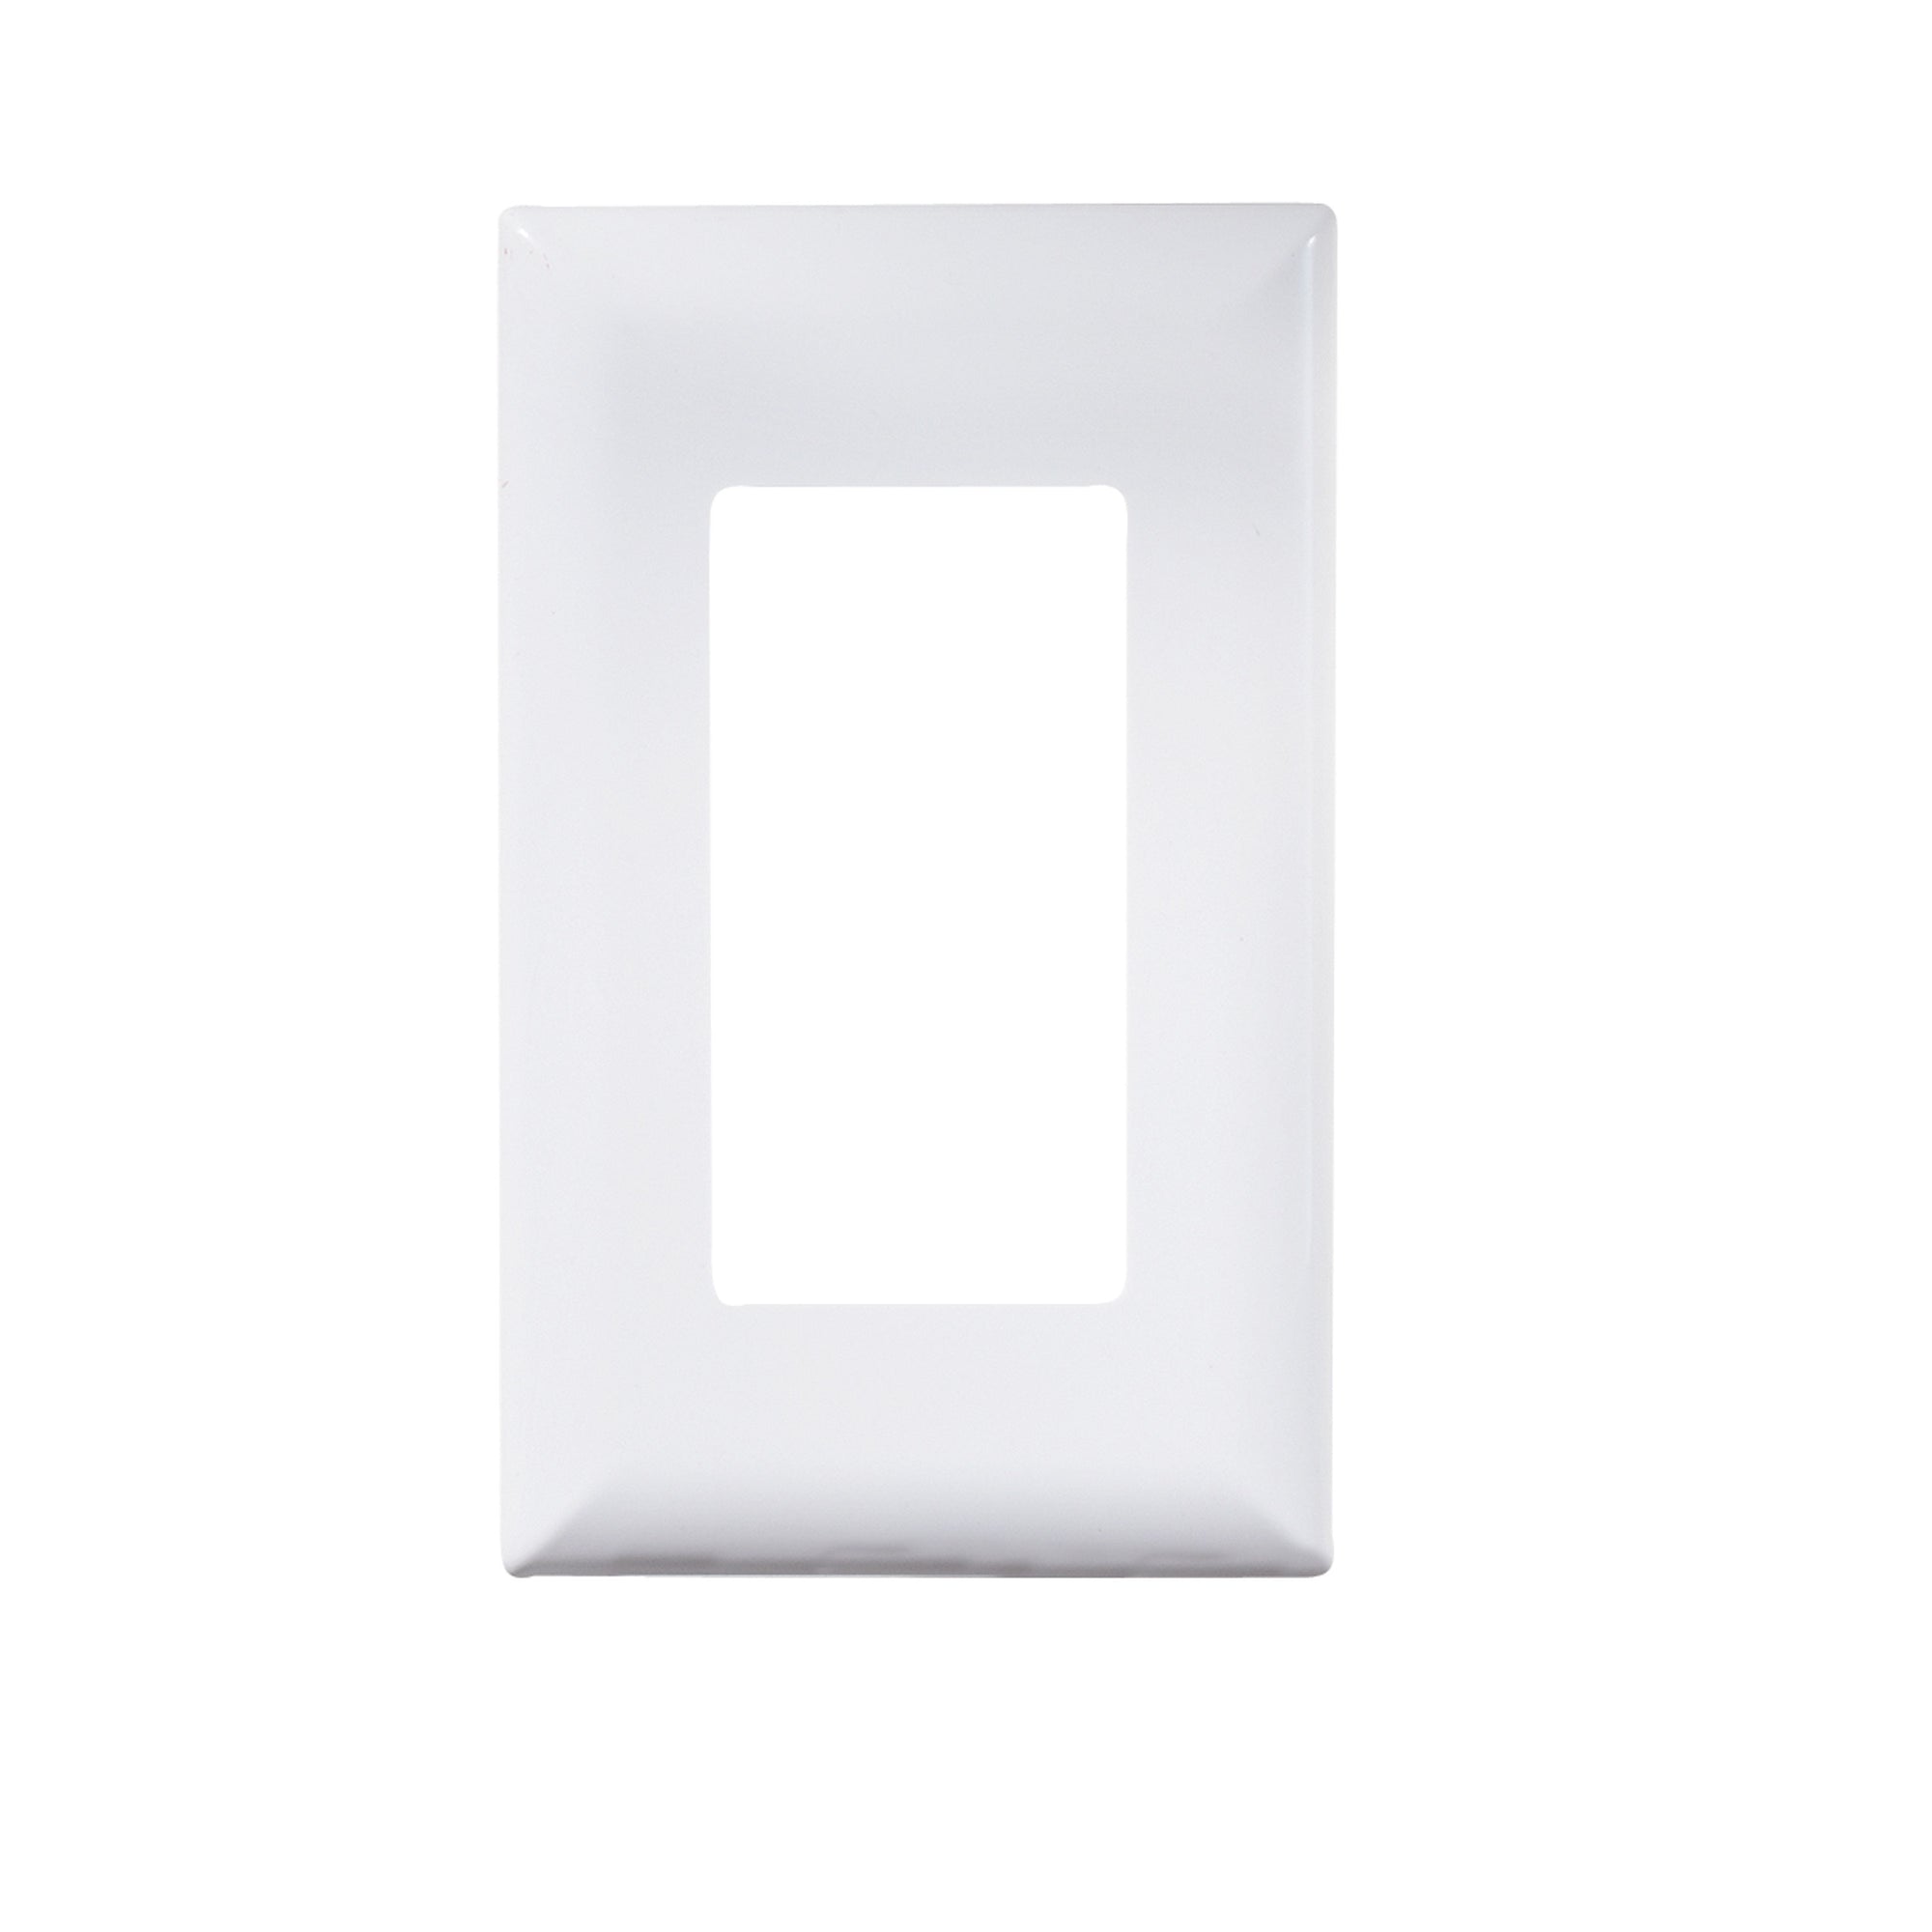 RV Designer S849 AC Contemporary Cover Plate - White